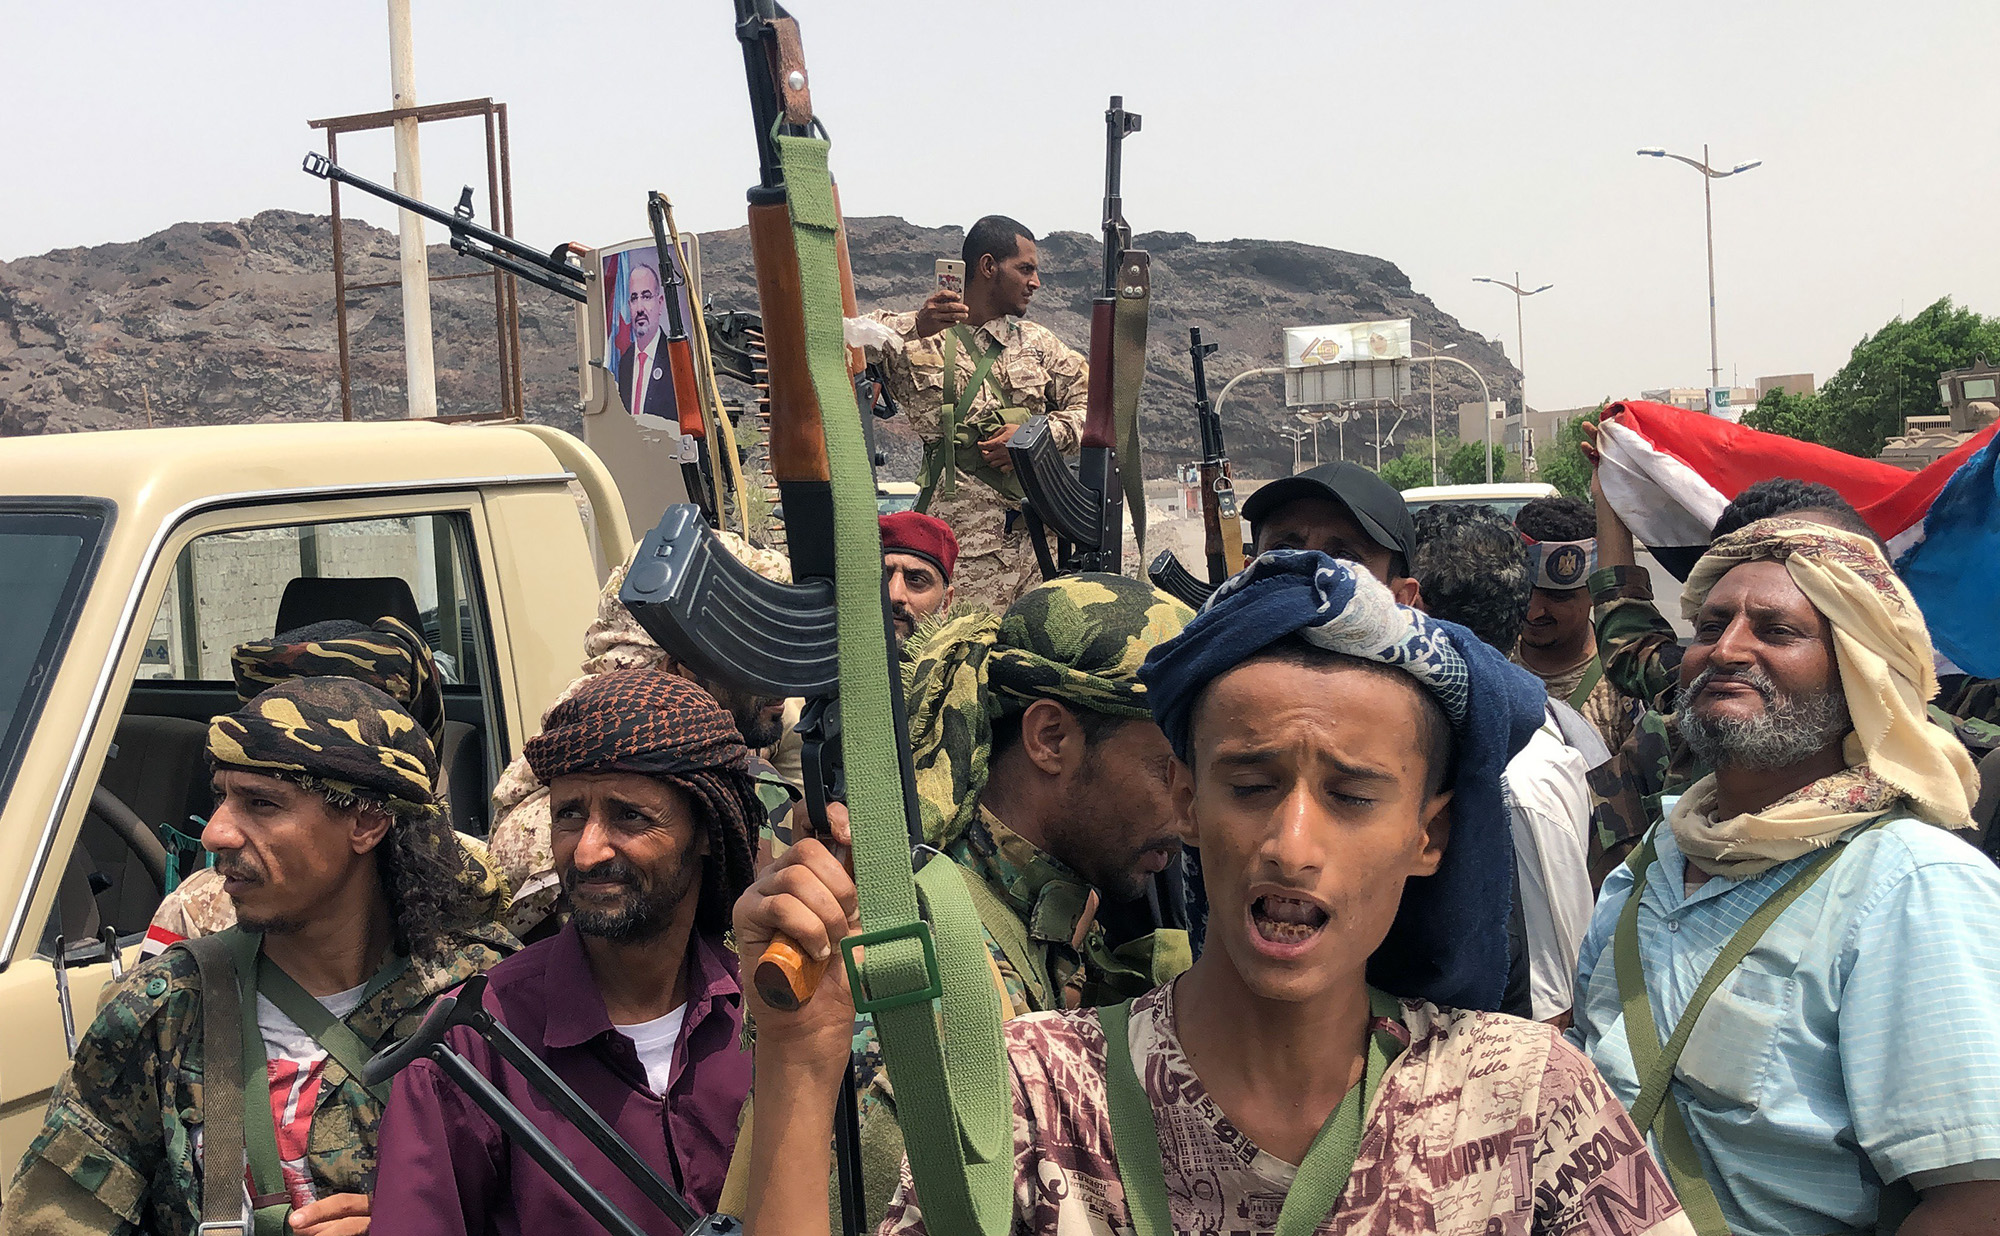 Новости йемена последнего часа. Аден Йемен. Южный Йемен-Адан. Аден (город Йемена).